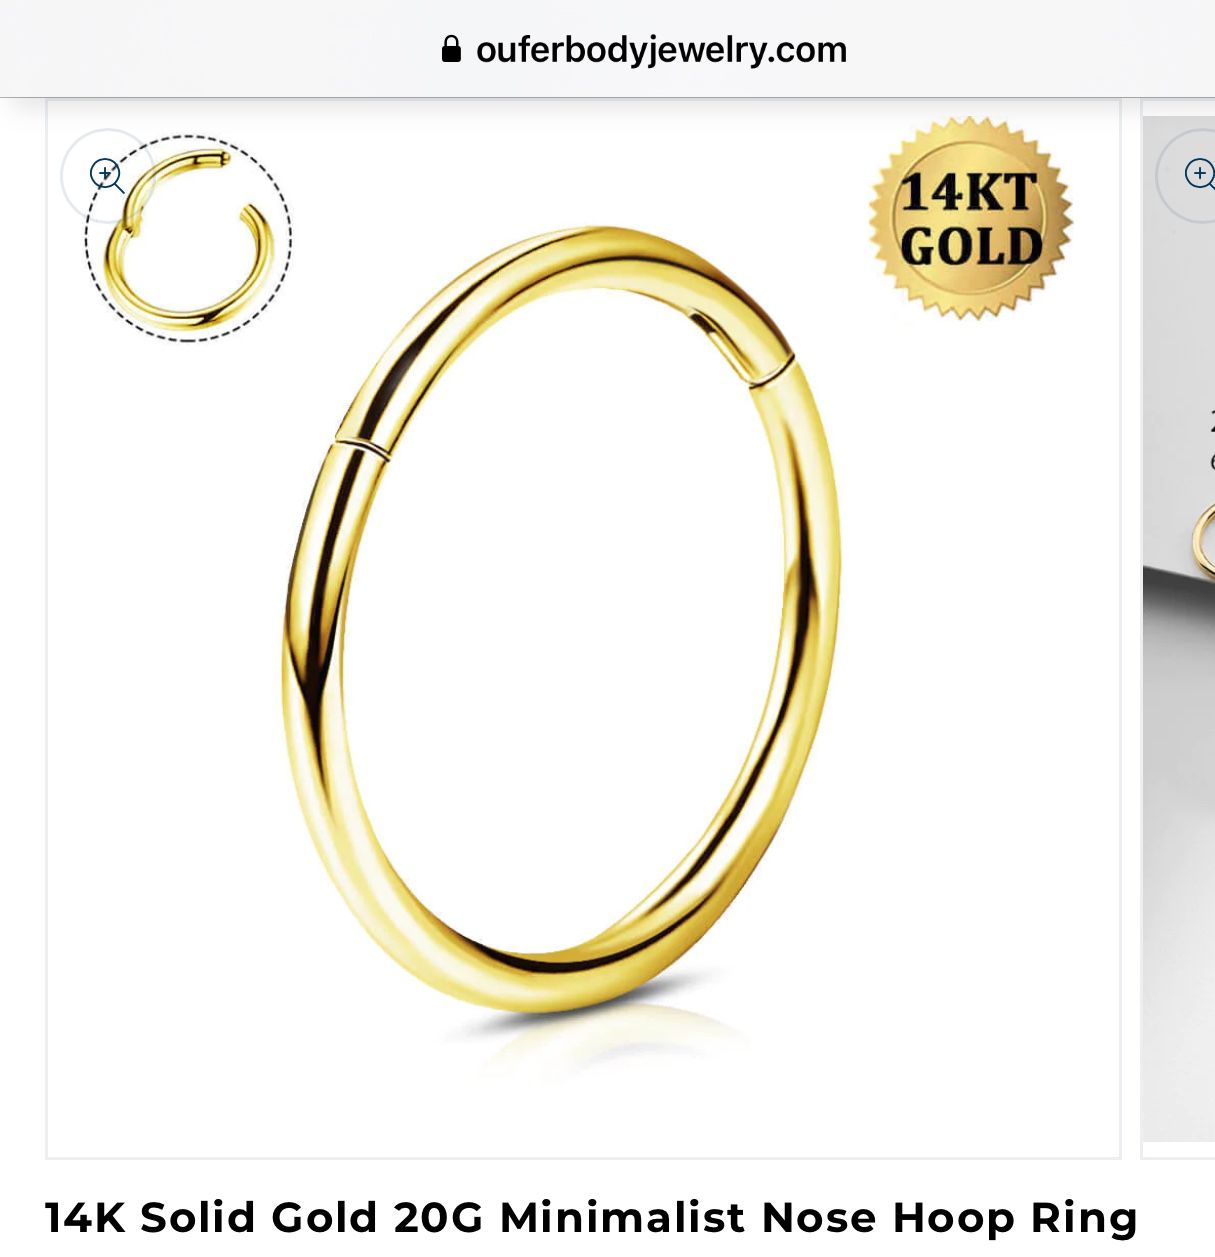 14K Solid Gold 20G Minimalist Nose Hoop Ring